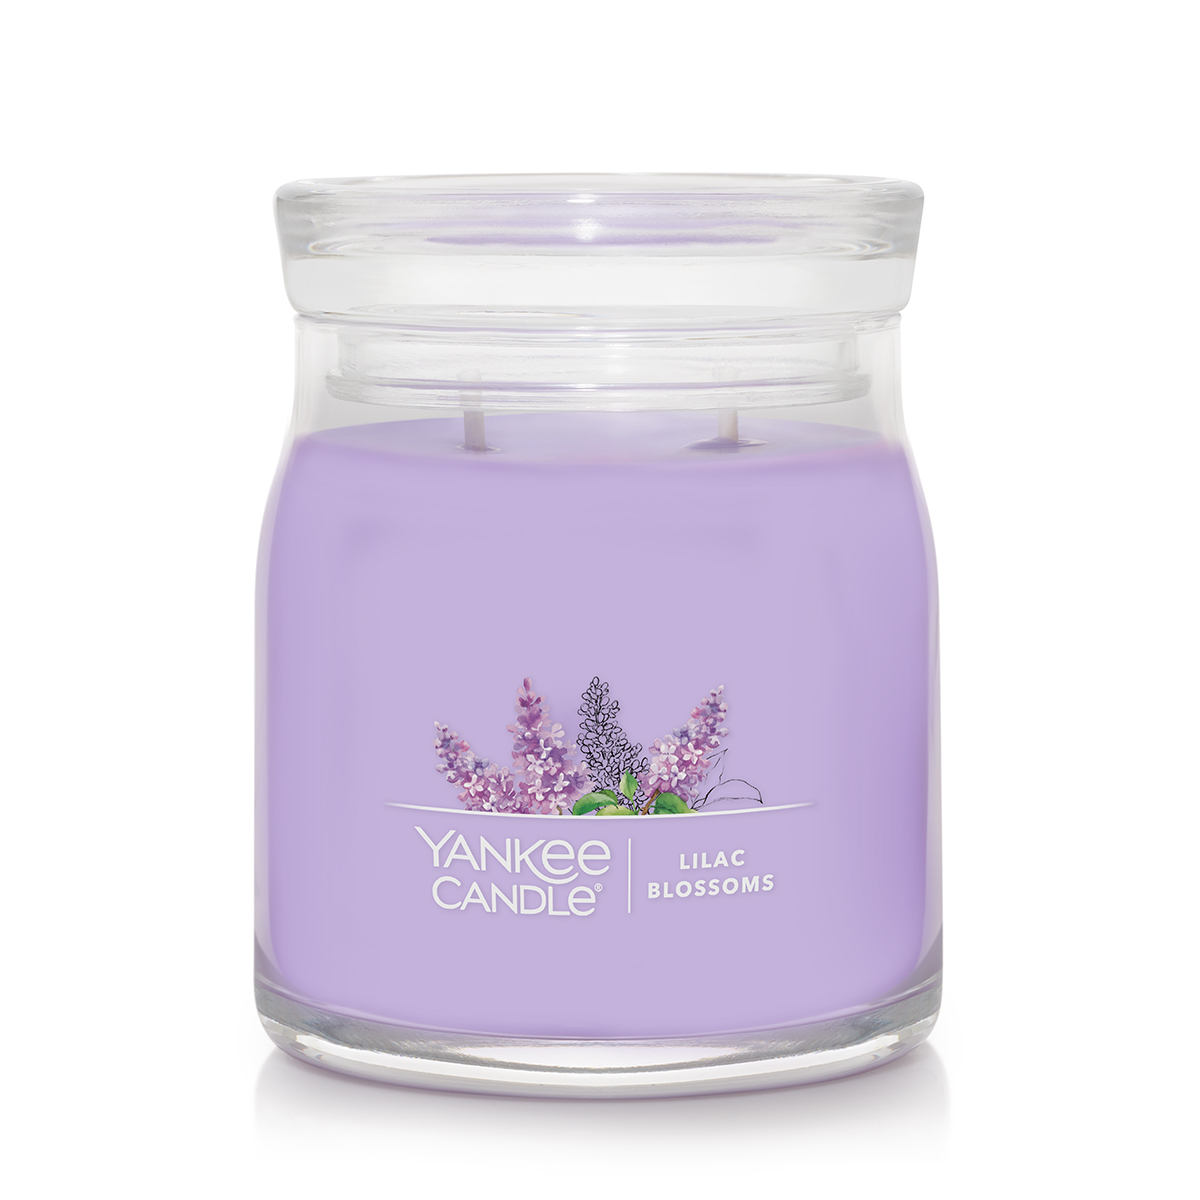 Yankee Candle(R) Signature 13oz. Lilac Blossoms(tm) Medium Jar Candle